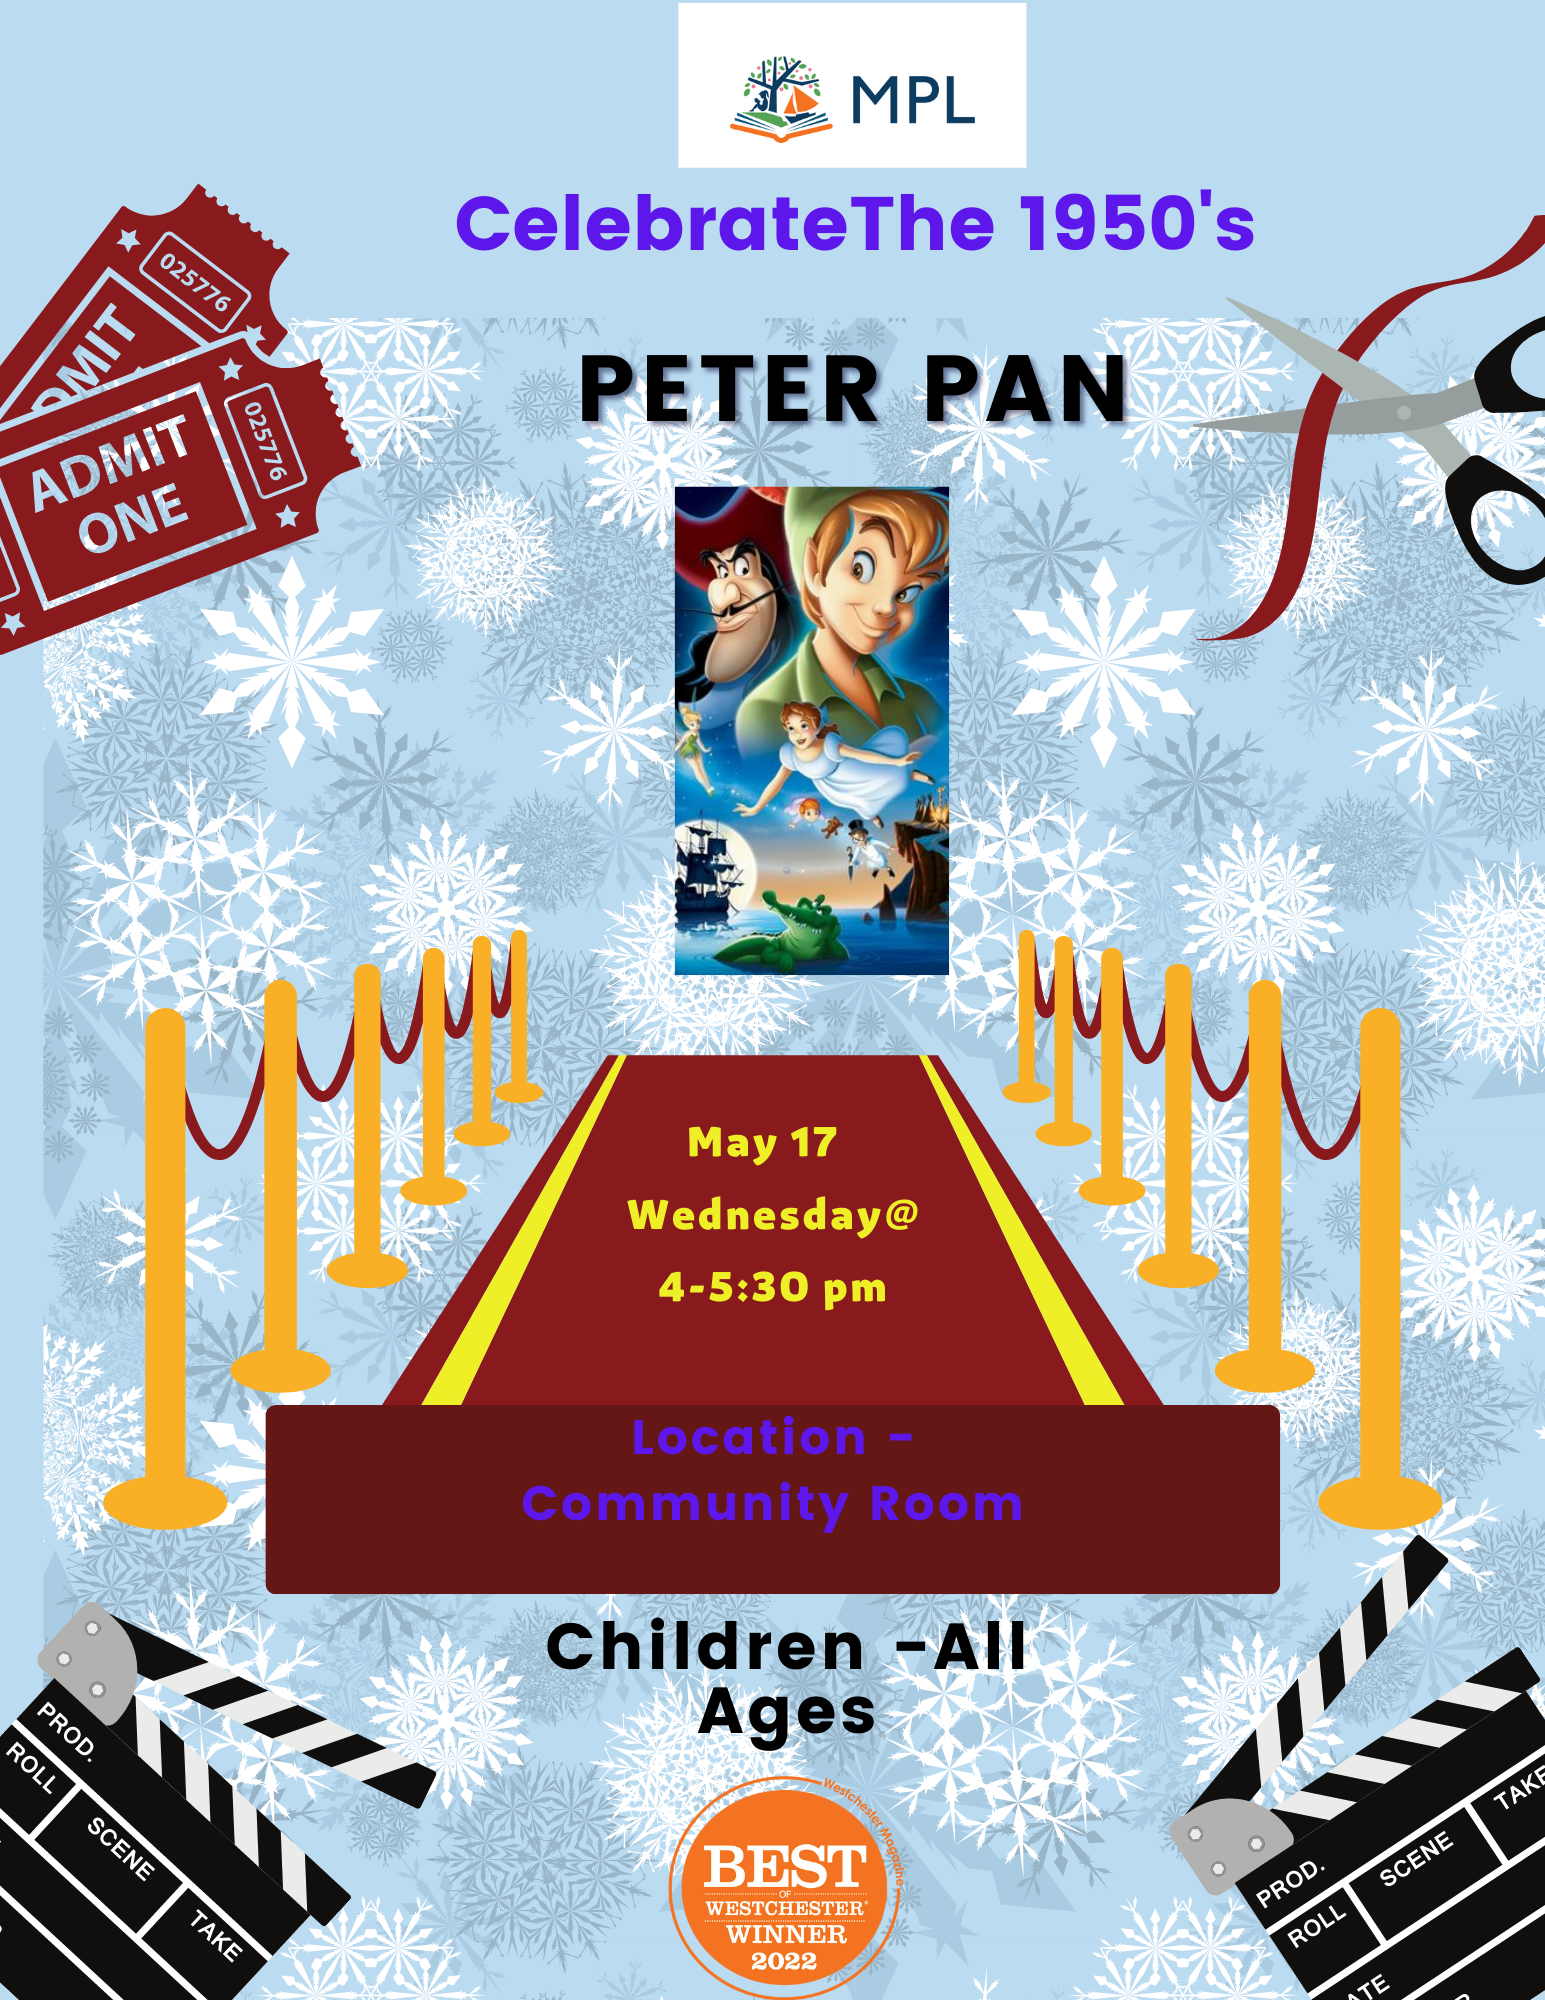 5/17 -- film, Peter Pan, @ 4-5:30pm in the community room